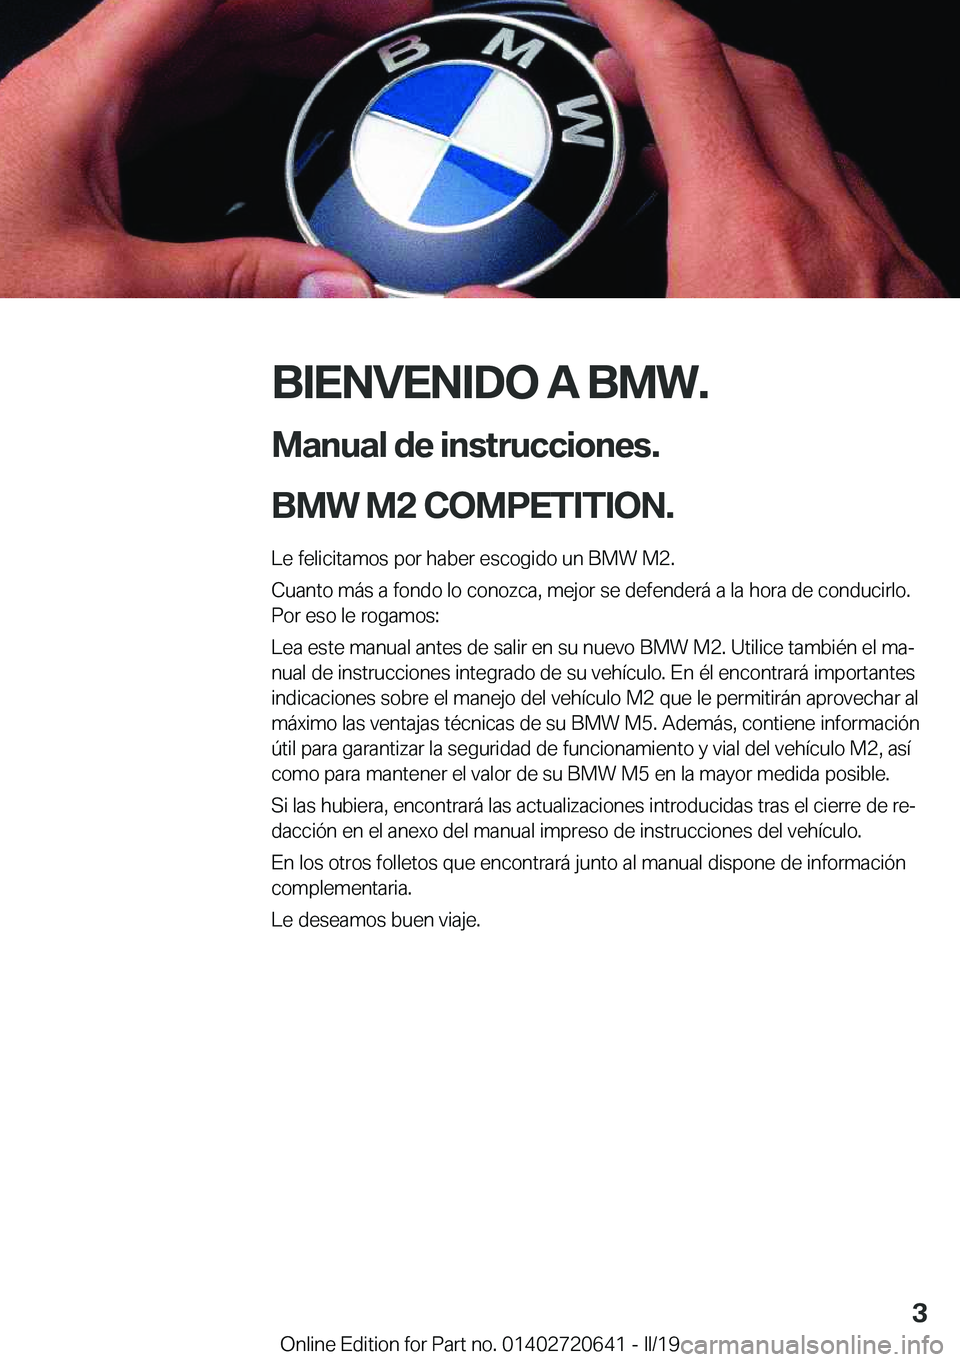 BMW M2 2020  Manuales de Empleo (in Spanish) �B�I�E�N�V�E�N�I�D�O��A��B�M�W�.
�M�a�n�u�a�l��d�e��i�n�s�t�r�u�c�c�i�o�n�e�s�.
�B�M�W��M�2��C�O�M�P�E�T�I�T�I�O�N�.� �L�e��f�e�l�i�c�i�t�a�m�o�s��p�o�r��h�a�b�e�r��e�s�c�o�g�i�d�o��u�n��